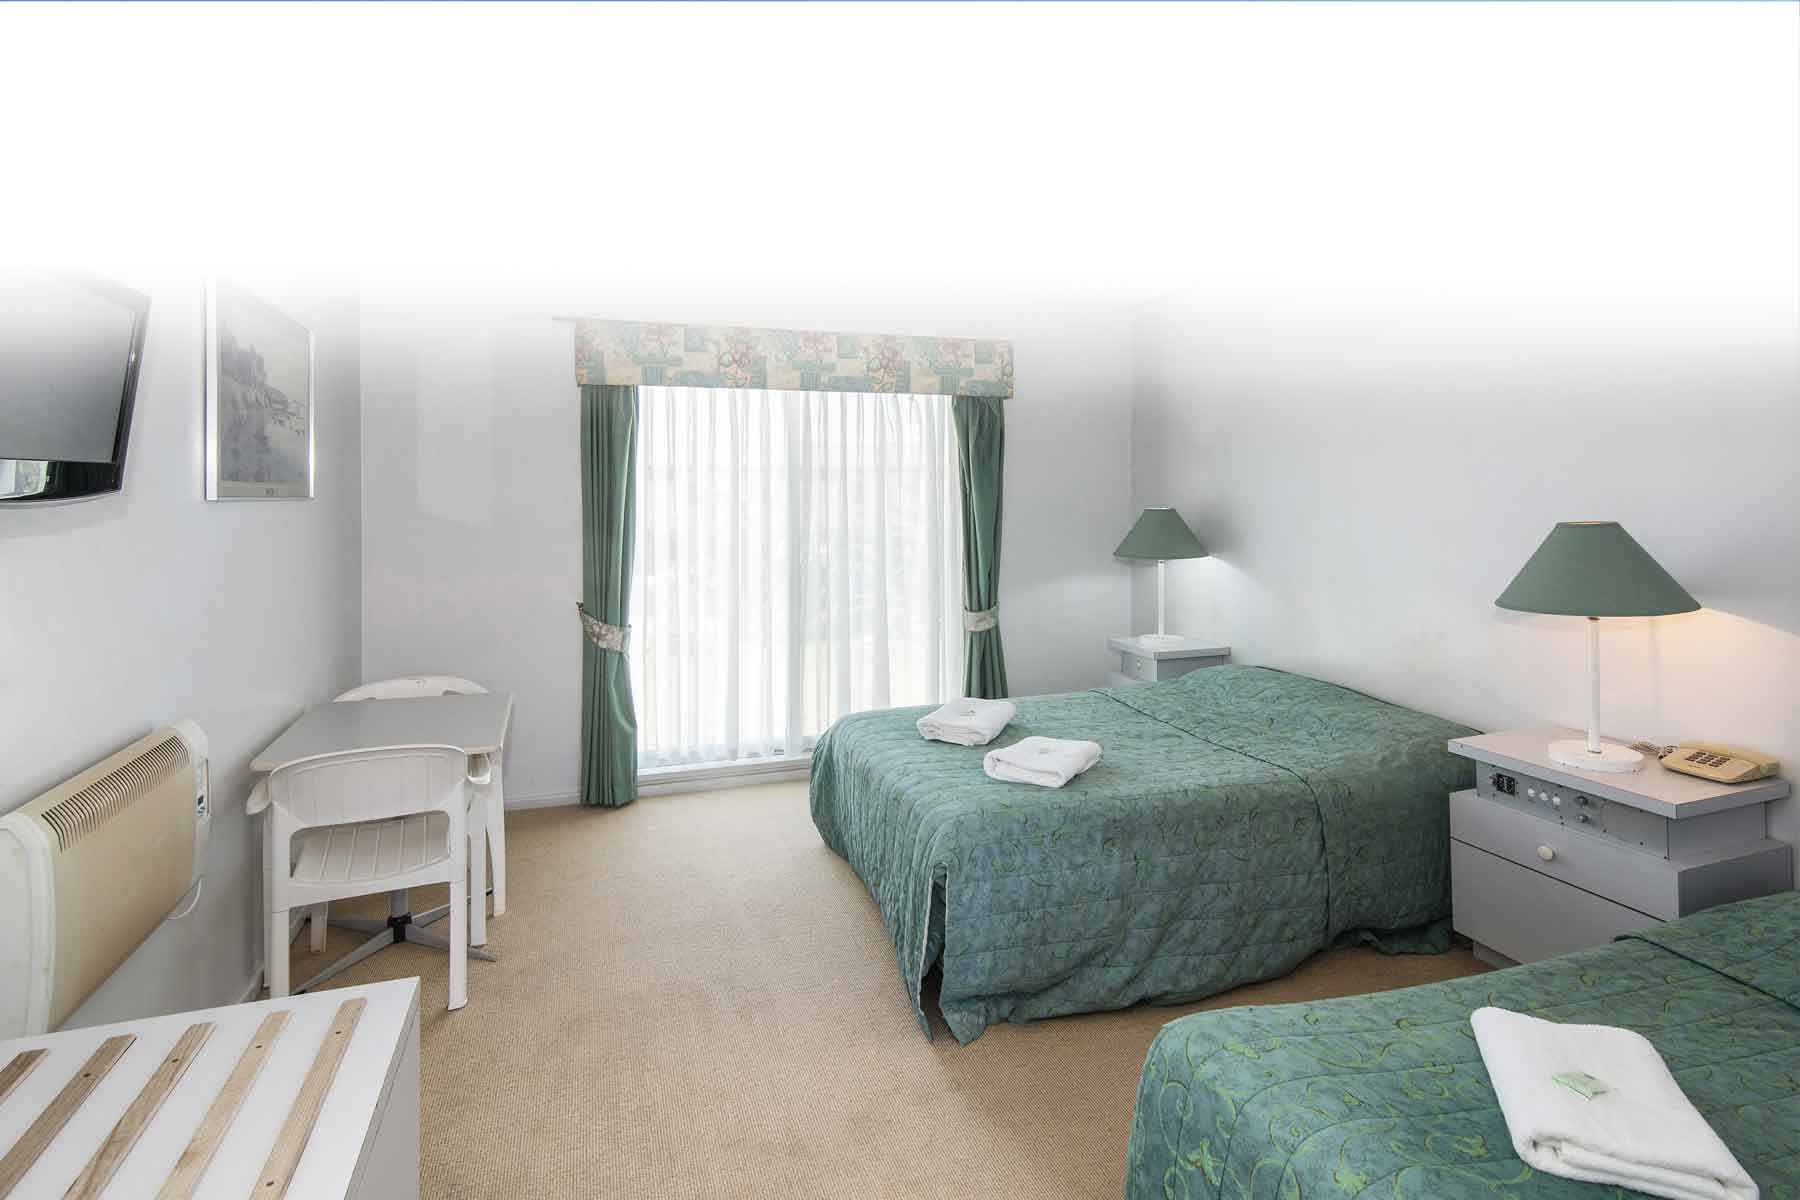 Augusta Hotel Leeuwin Family accommodation room